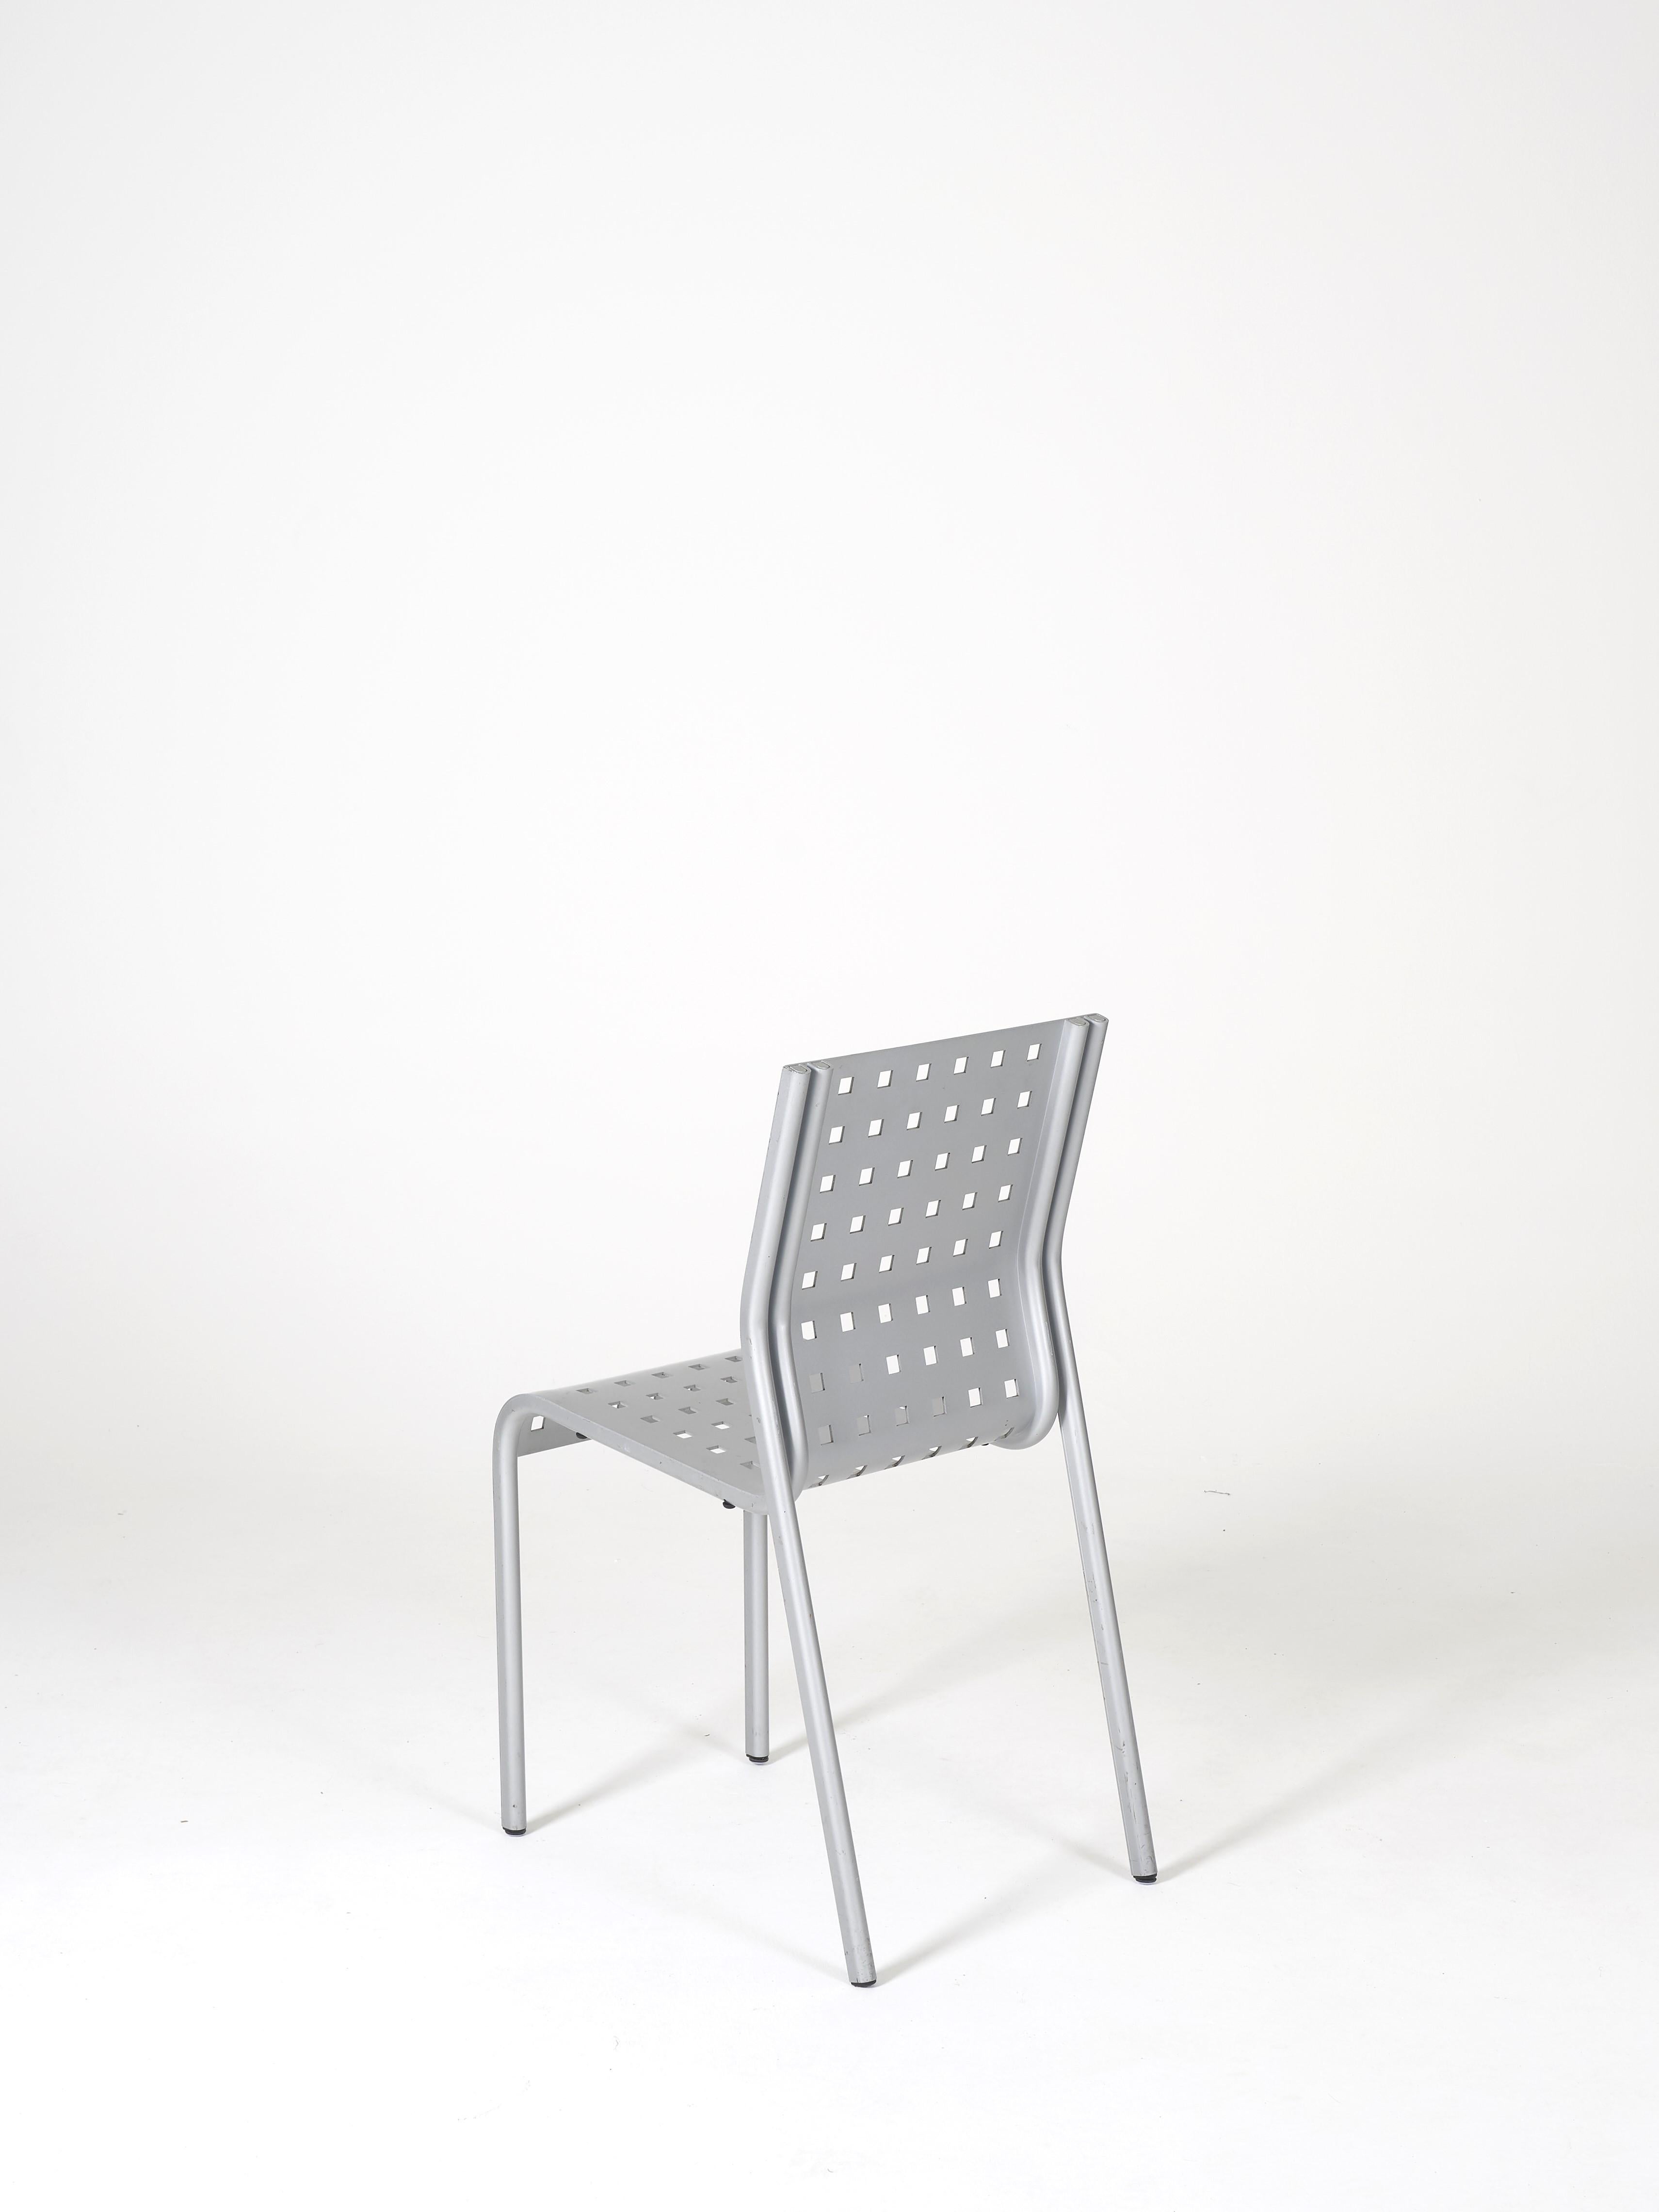 French Provincial Mirandolina Chair N°2068 by Pietro Arosio Edition Zanotta 1990s